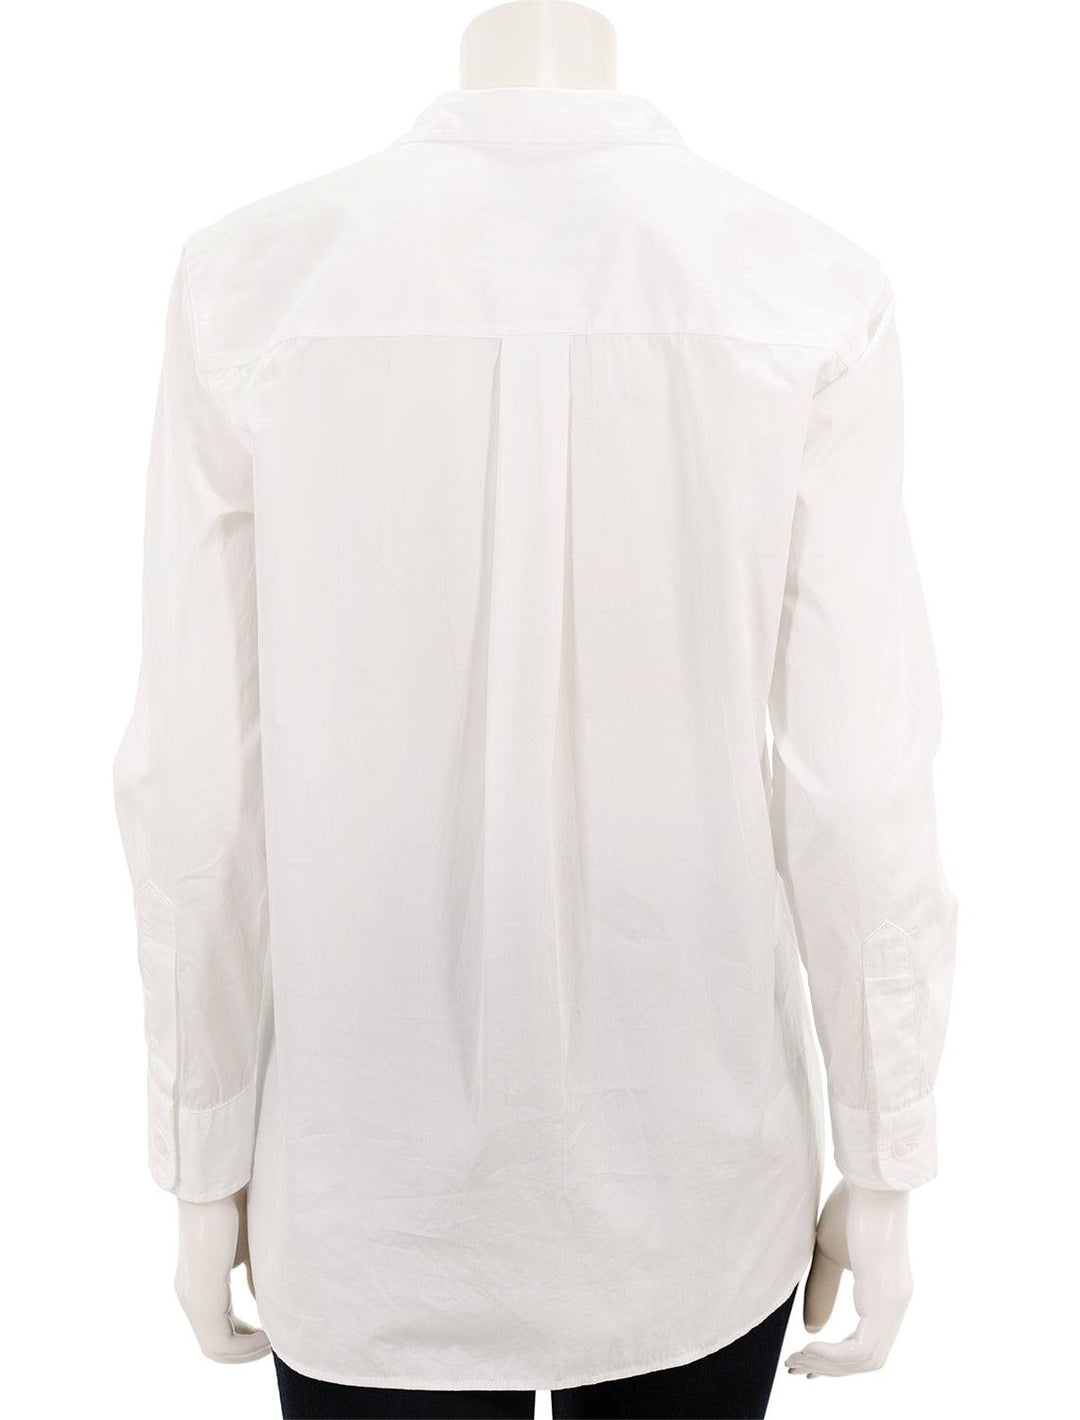 Back view of Frank & Eileen's joedy shirt in white superluxe italian cotton.